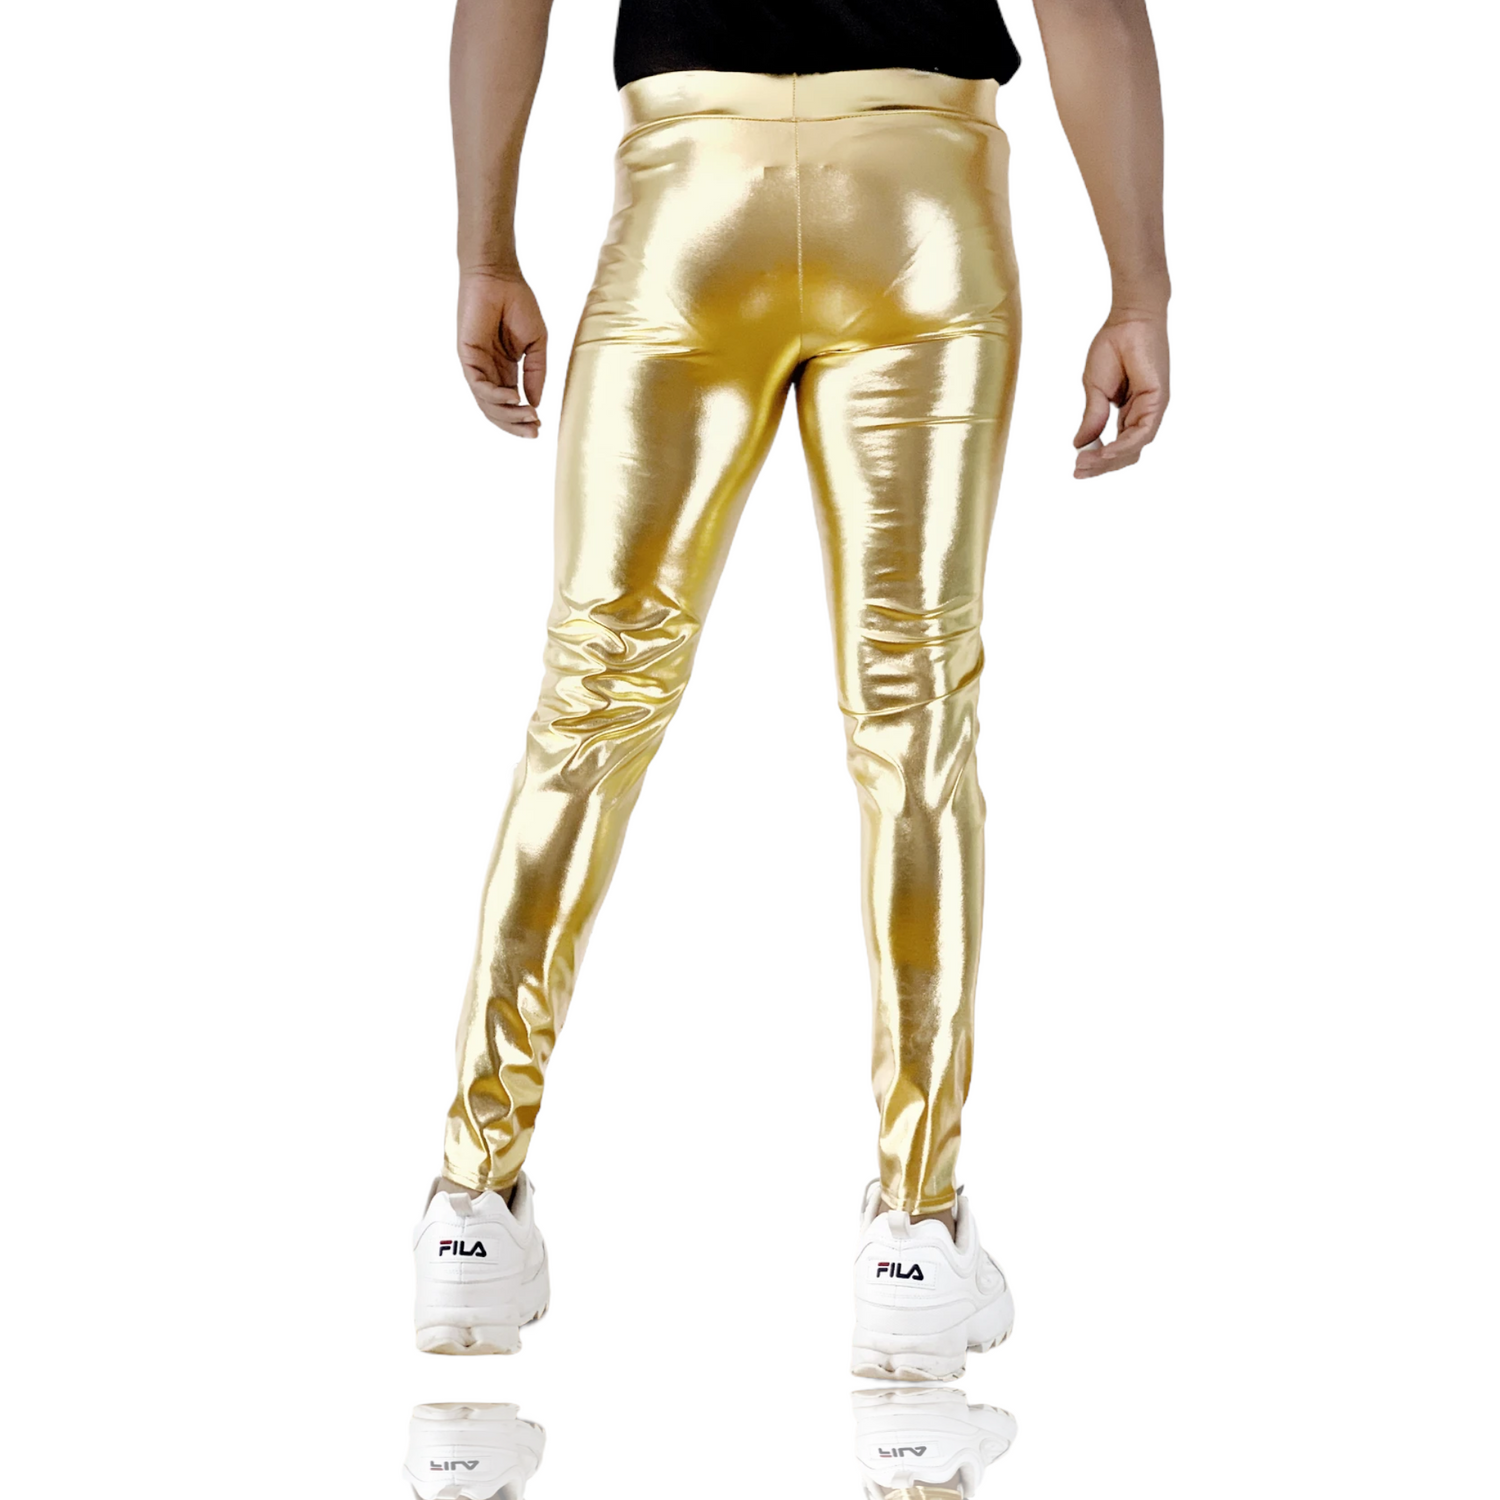 Womens High Waisted Yoga Pants shown in Gold Metallic Foil Spandex, custom  made by Suzi Fox.